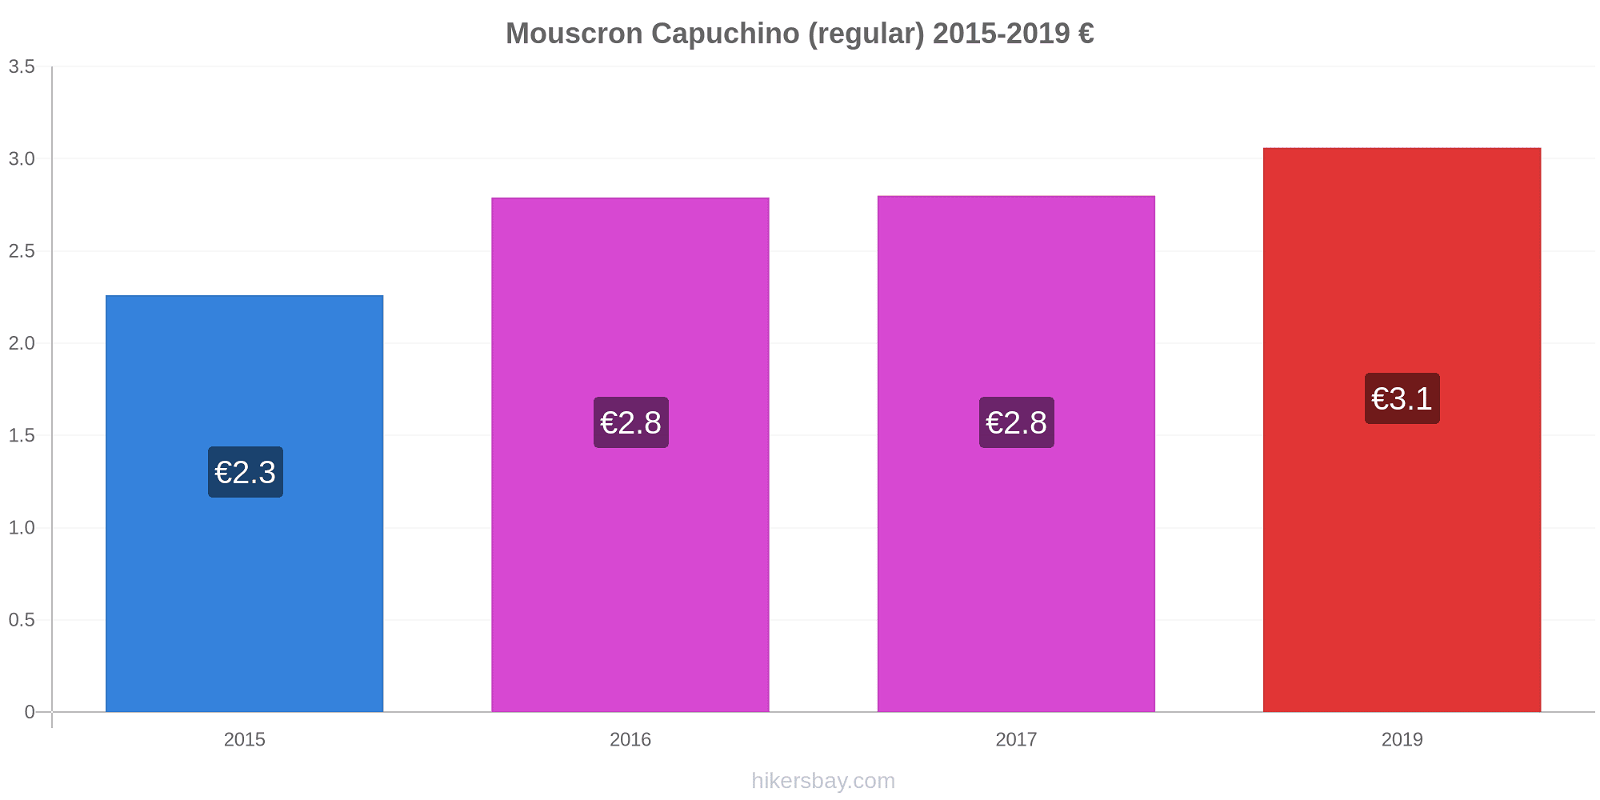 Mouscron cambios de precios Capuchino (regular) hikersbay.com